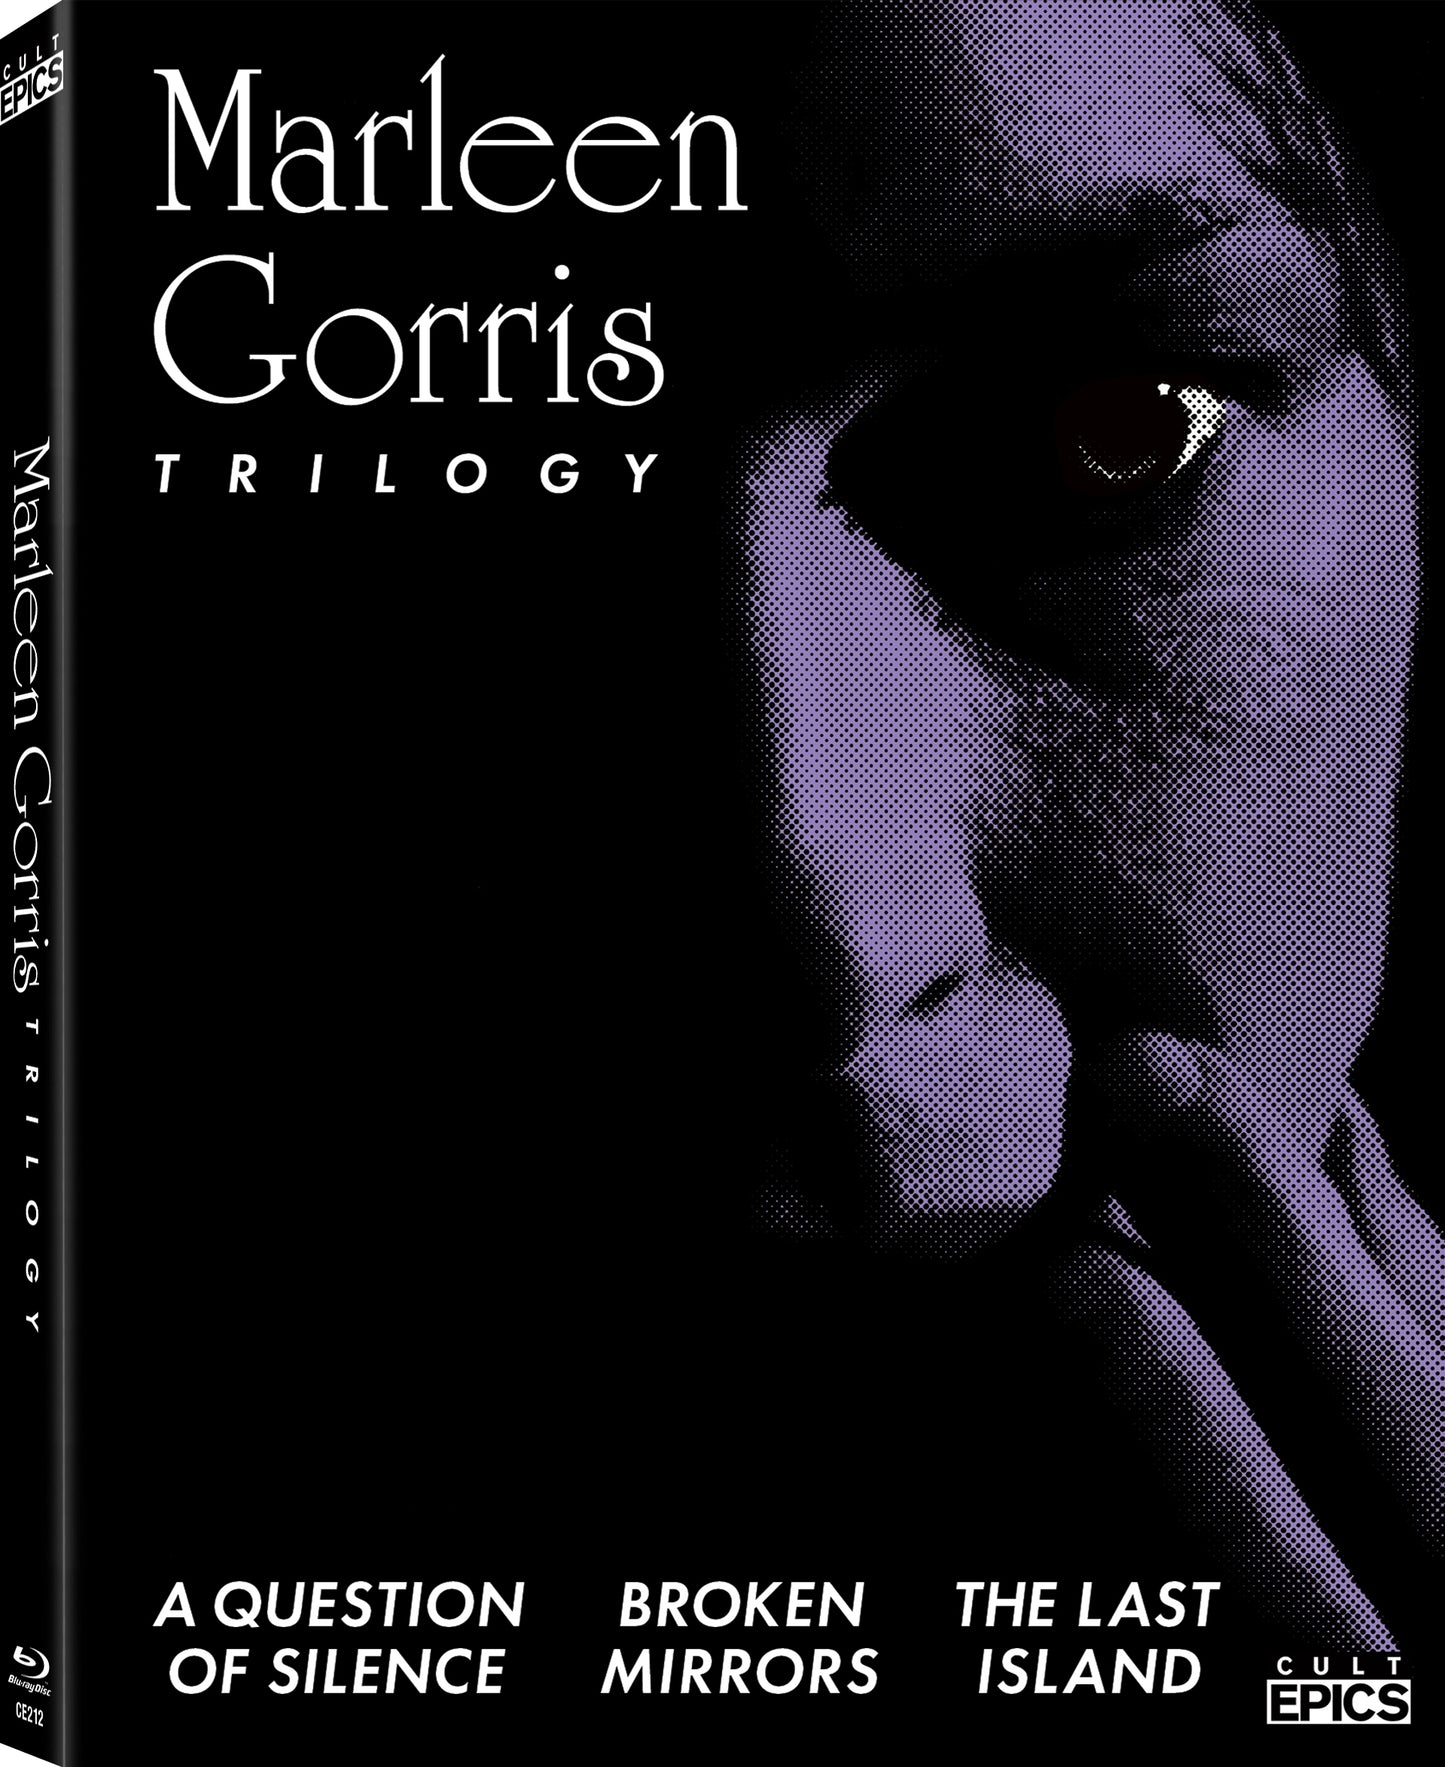 Marleen Gorris Trilogy Blu-ray with Slipcover (Cult Epics/ U.S.)